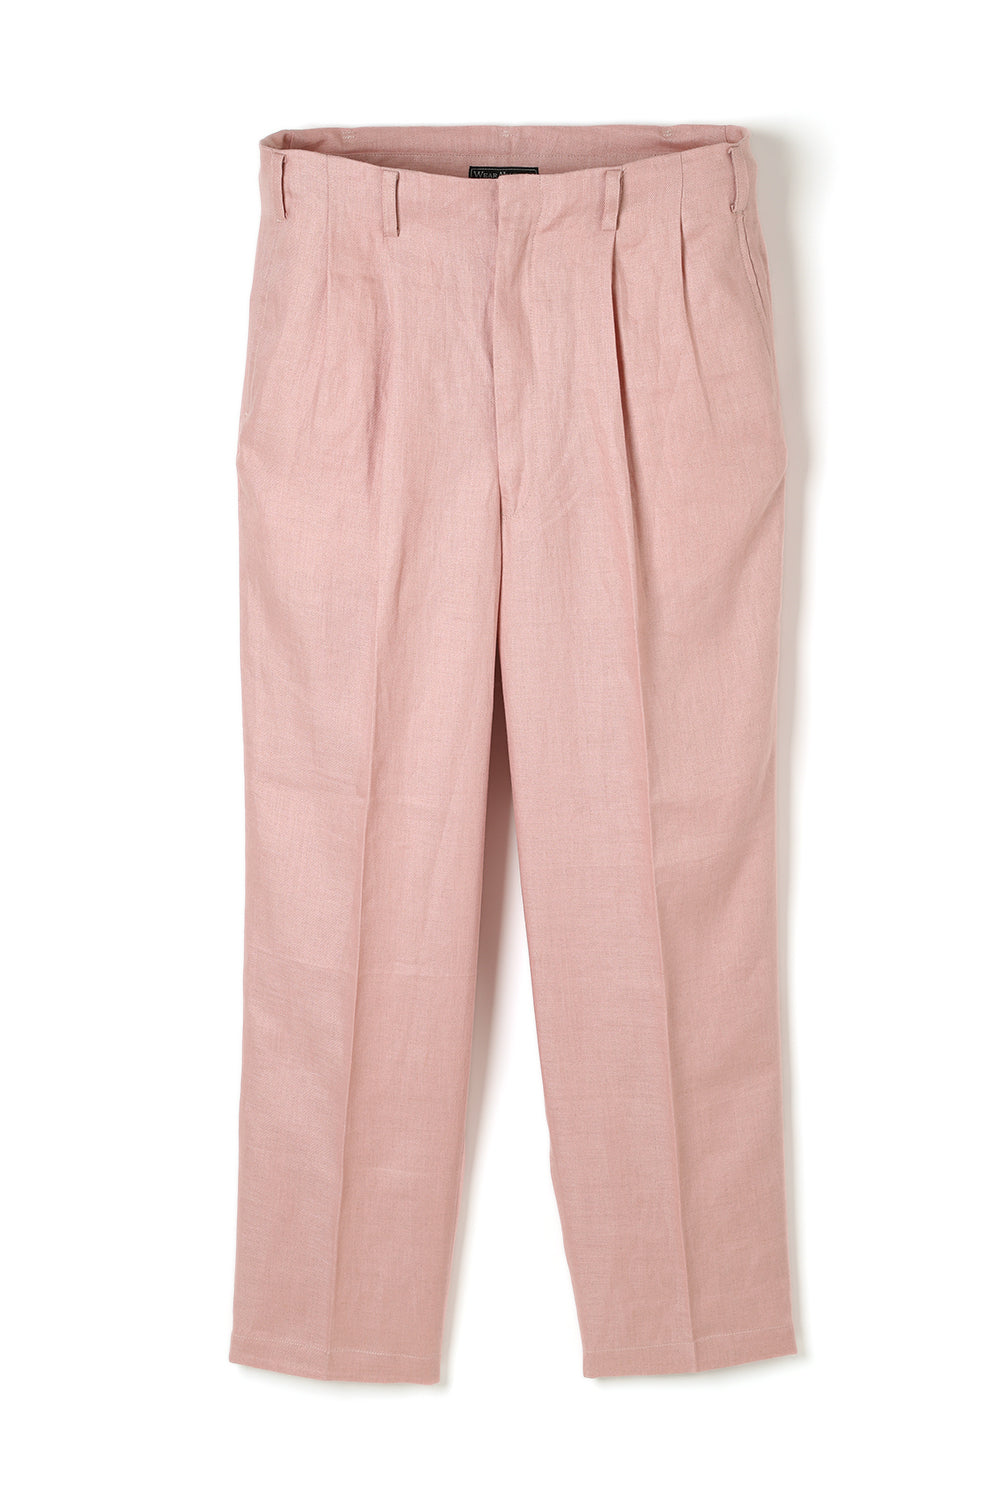 Lot.779 Double Pleats Linen Trousers -Pink-